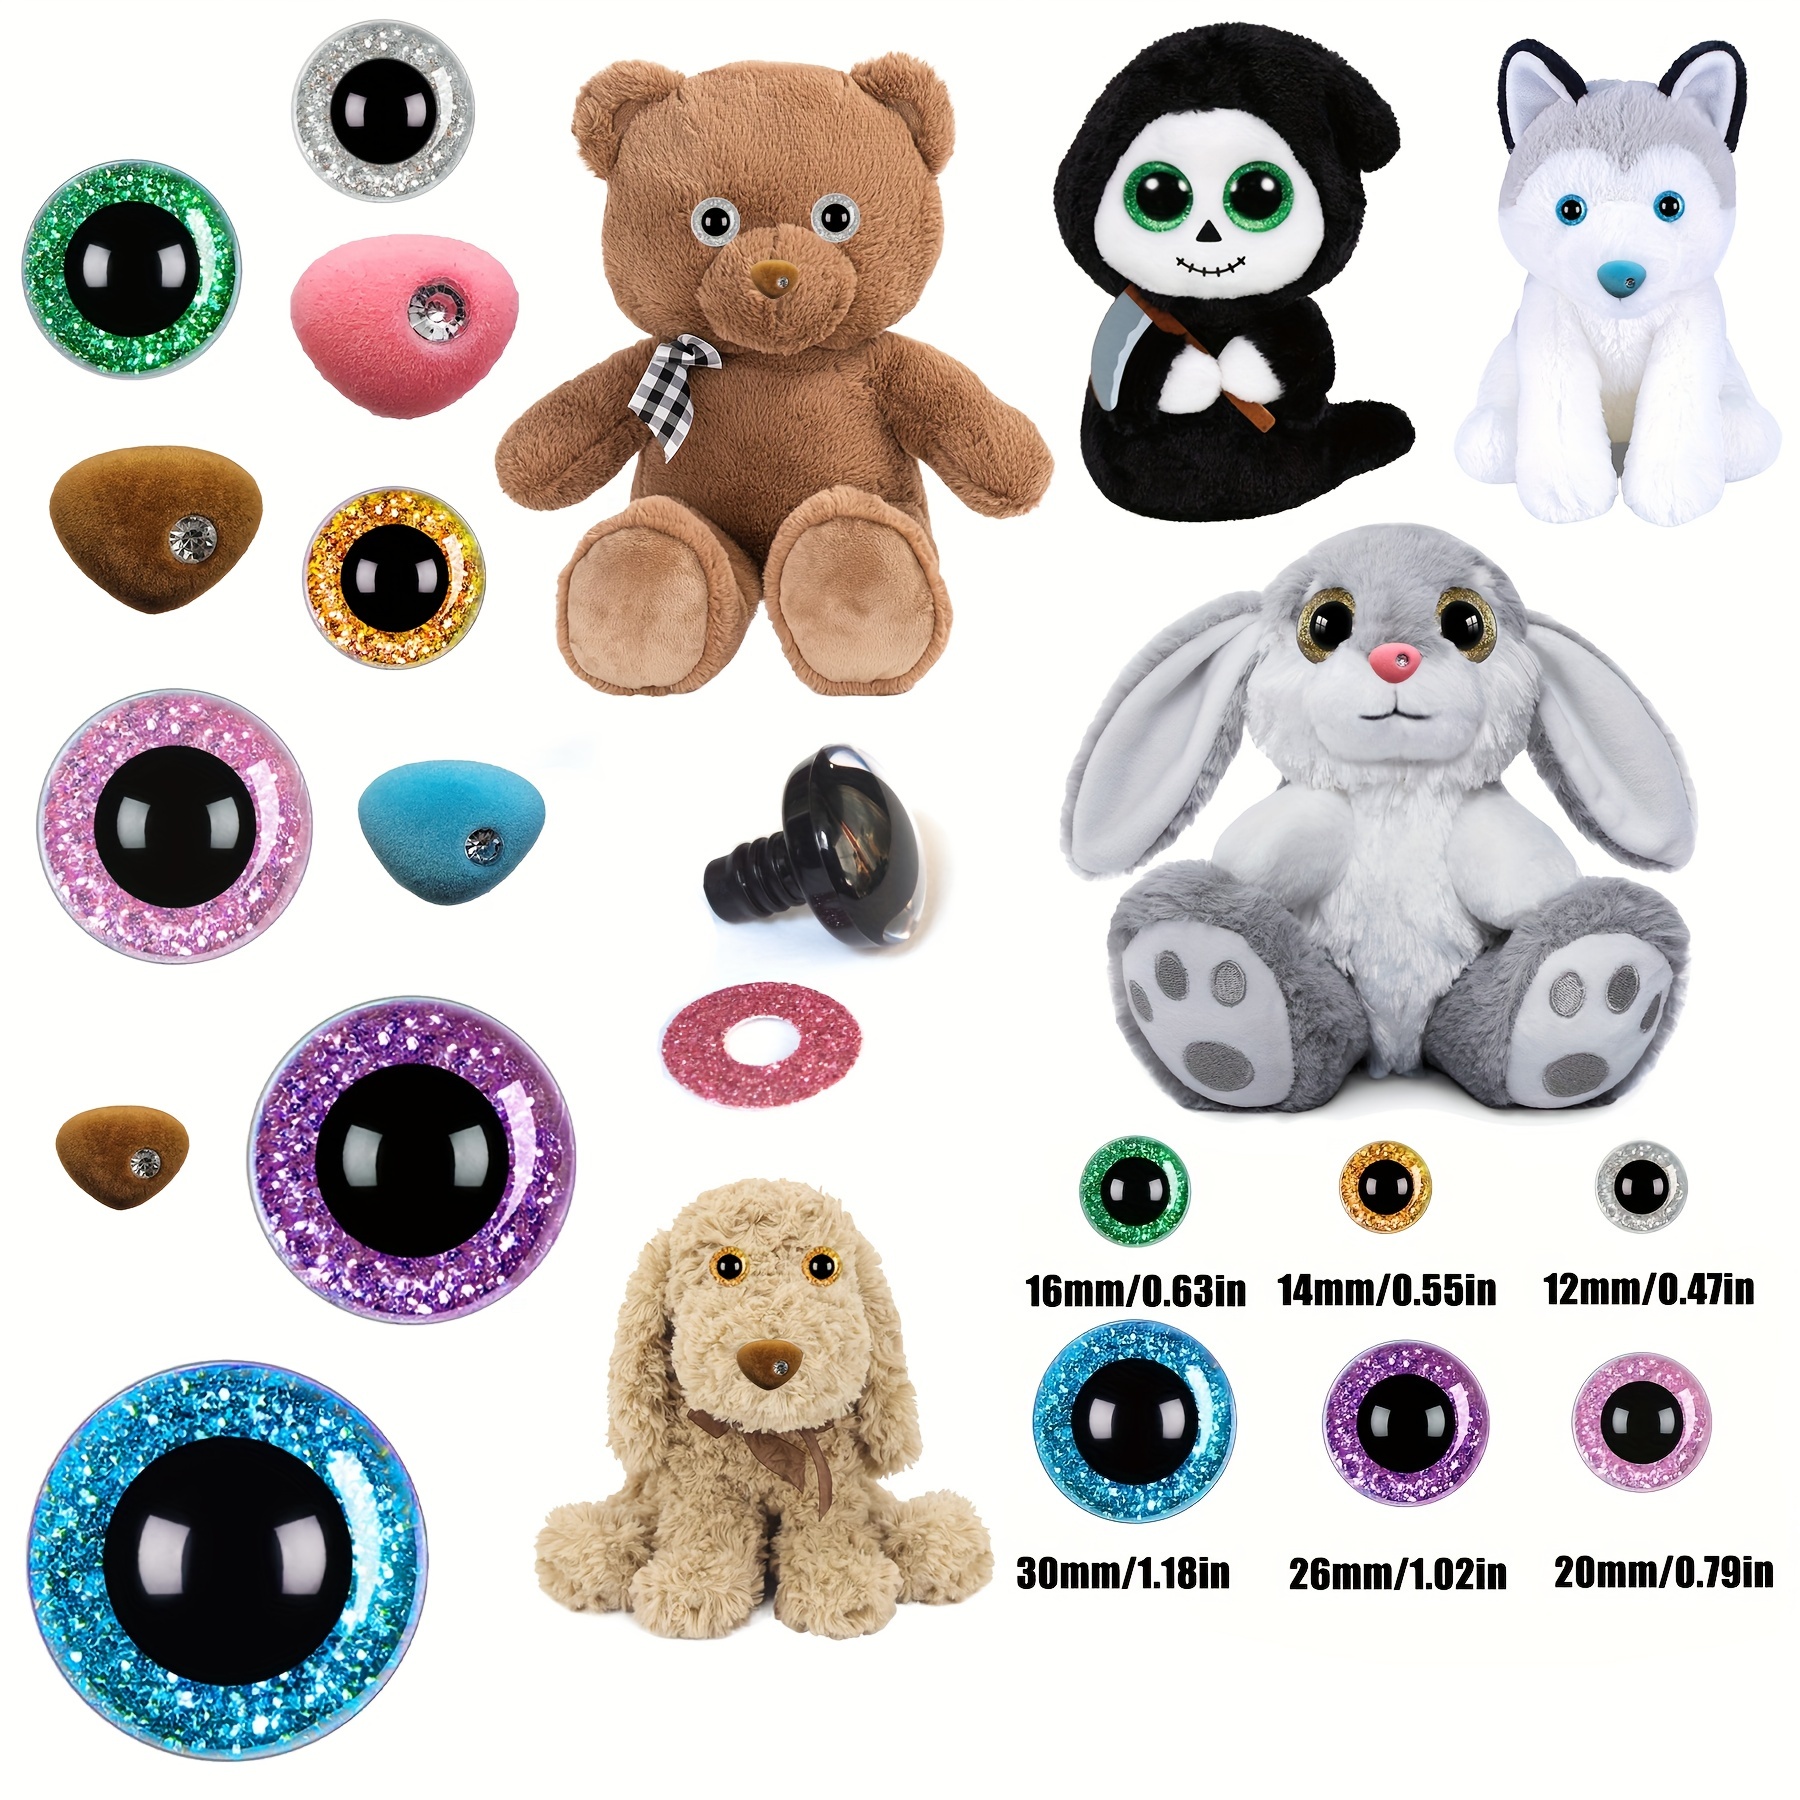 2 Pairs Brown 18 mm safety eyes stuffed animal toys amigurumi teddy bear